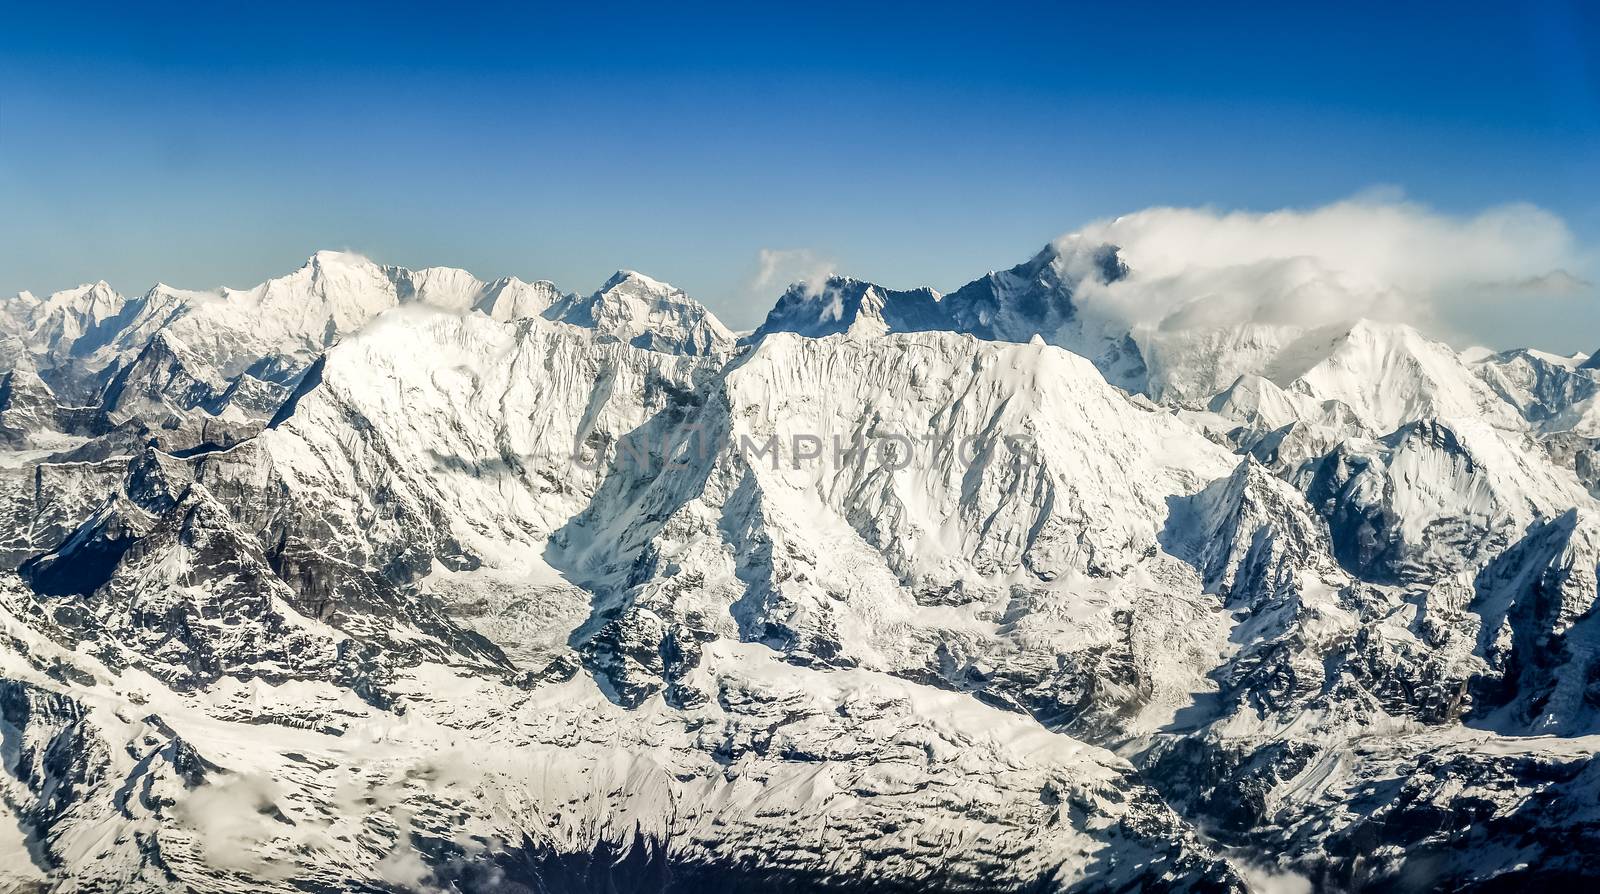 Himalayas mountains Everest range panorama by martinm303